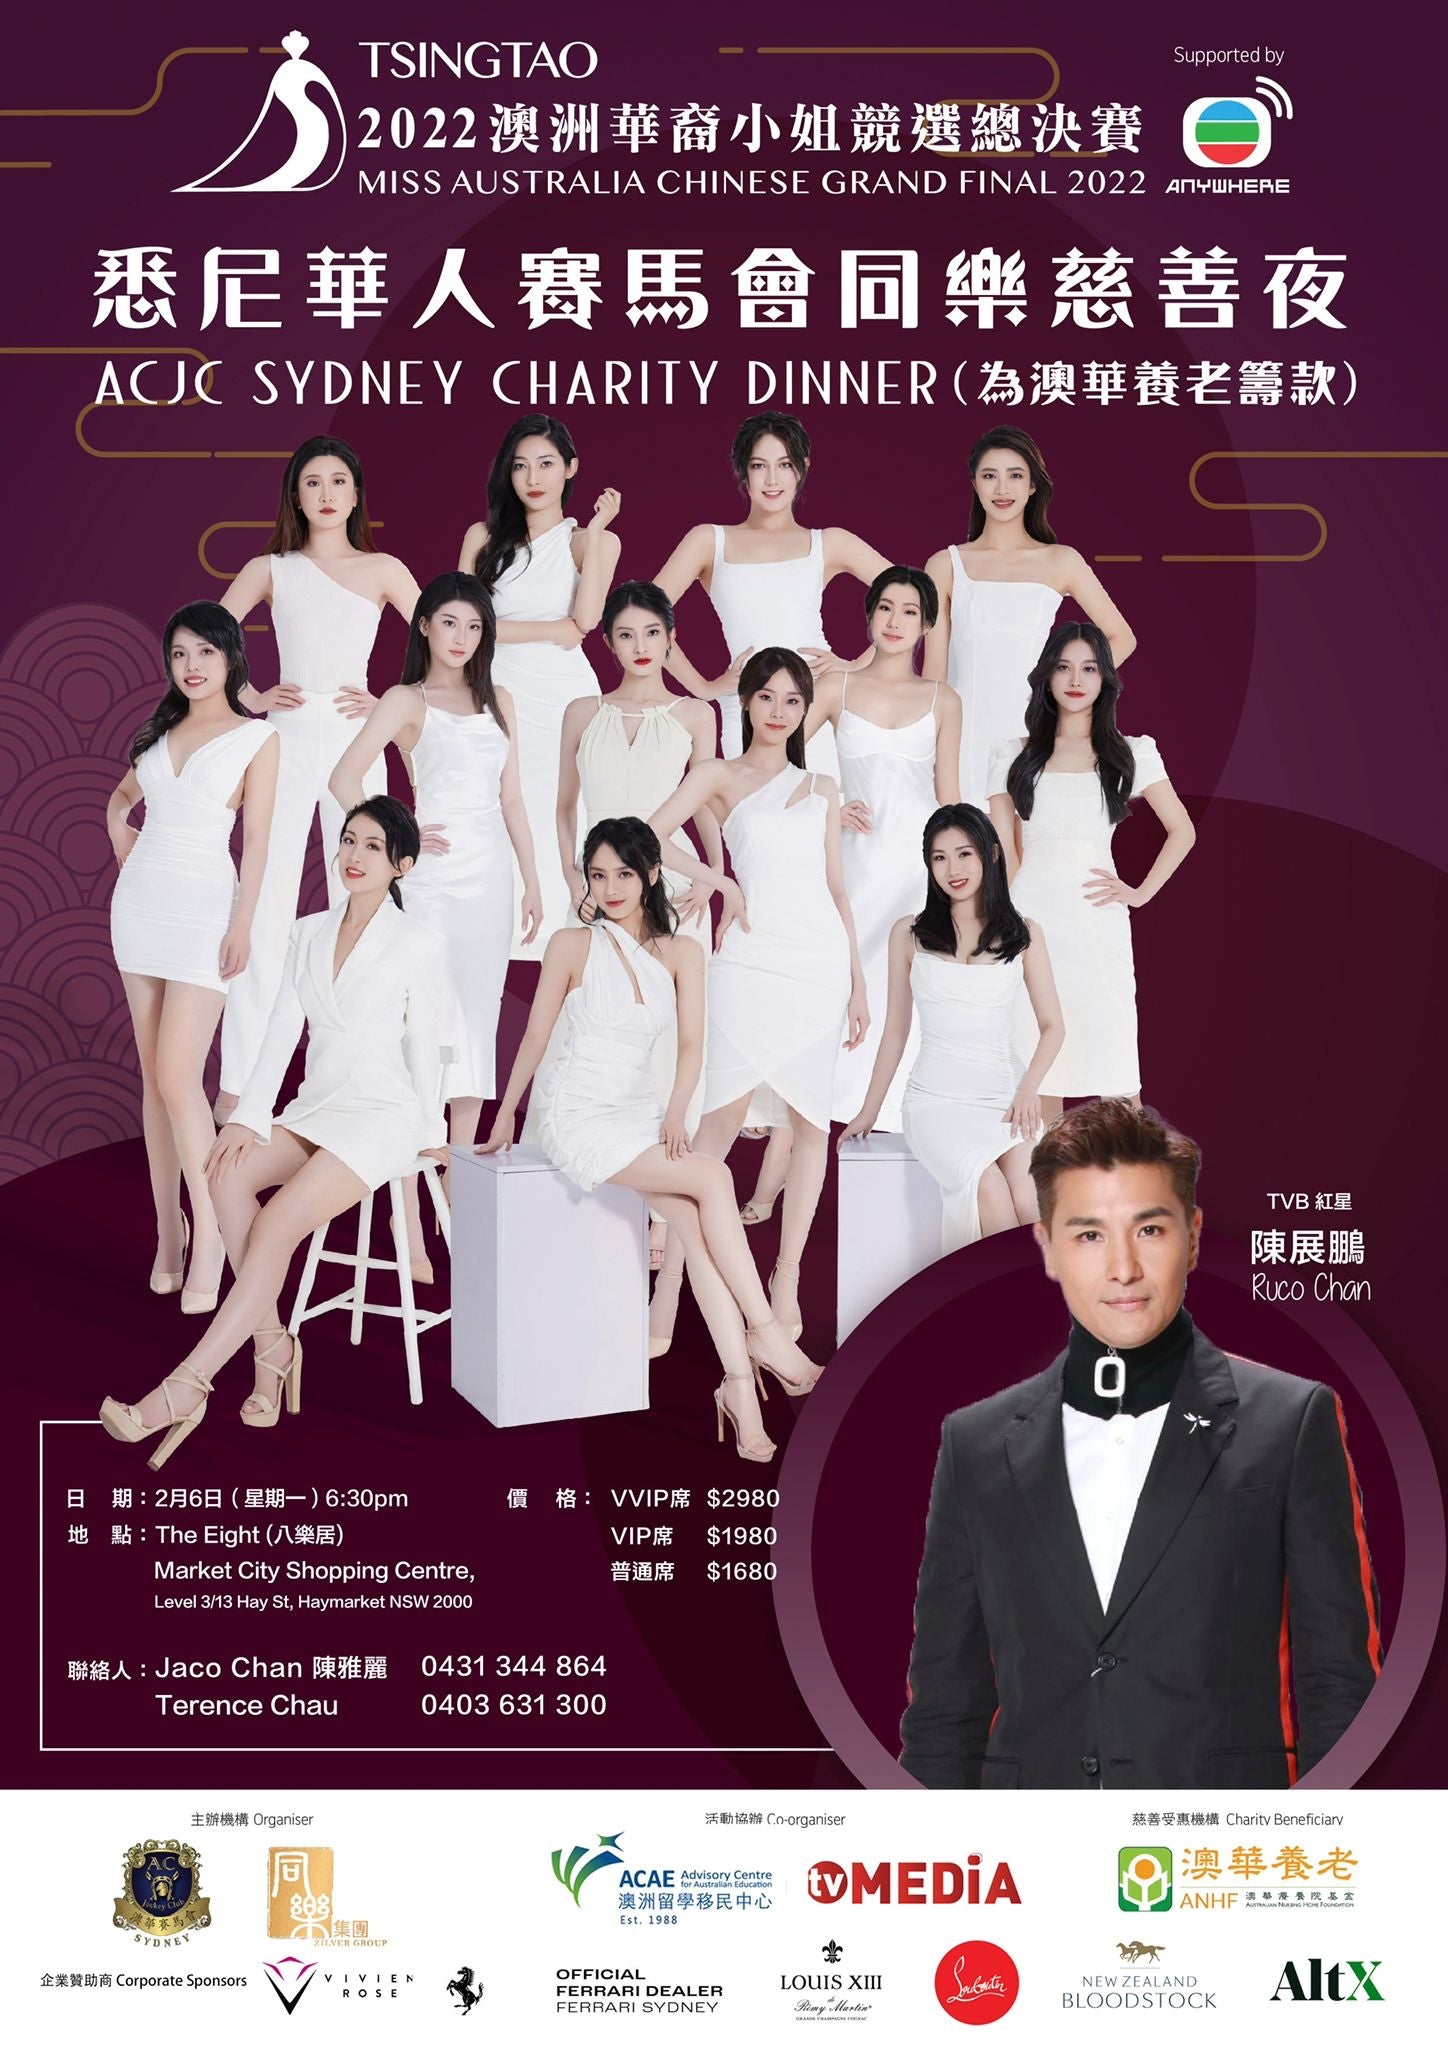 Vivien Rose Sponsors ACJC Sydney Charity Dinner & Miss Australia Chinese Grand Final 2022